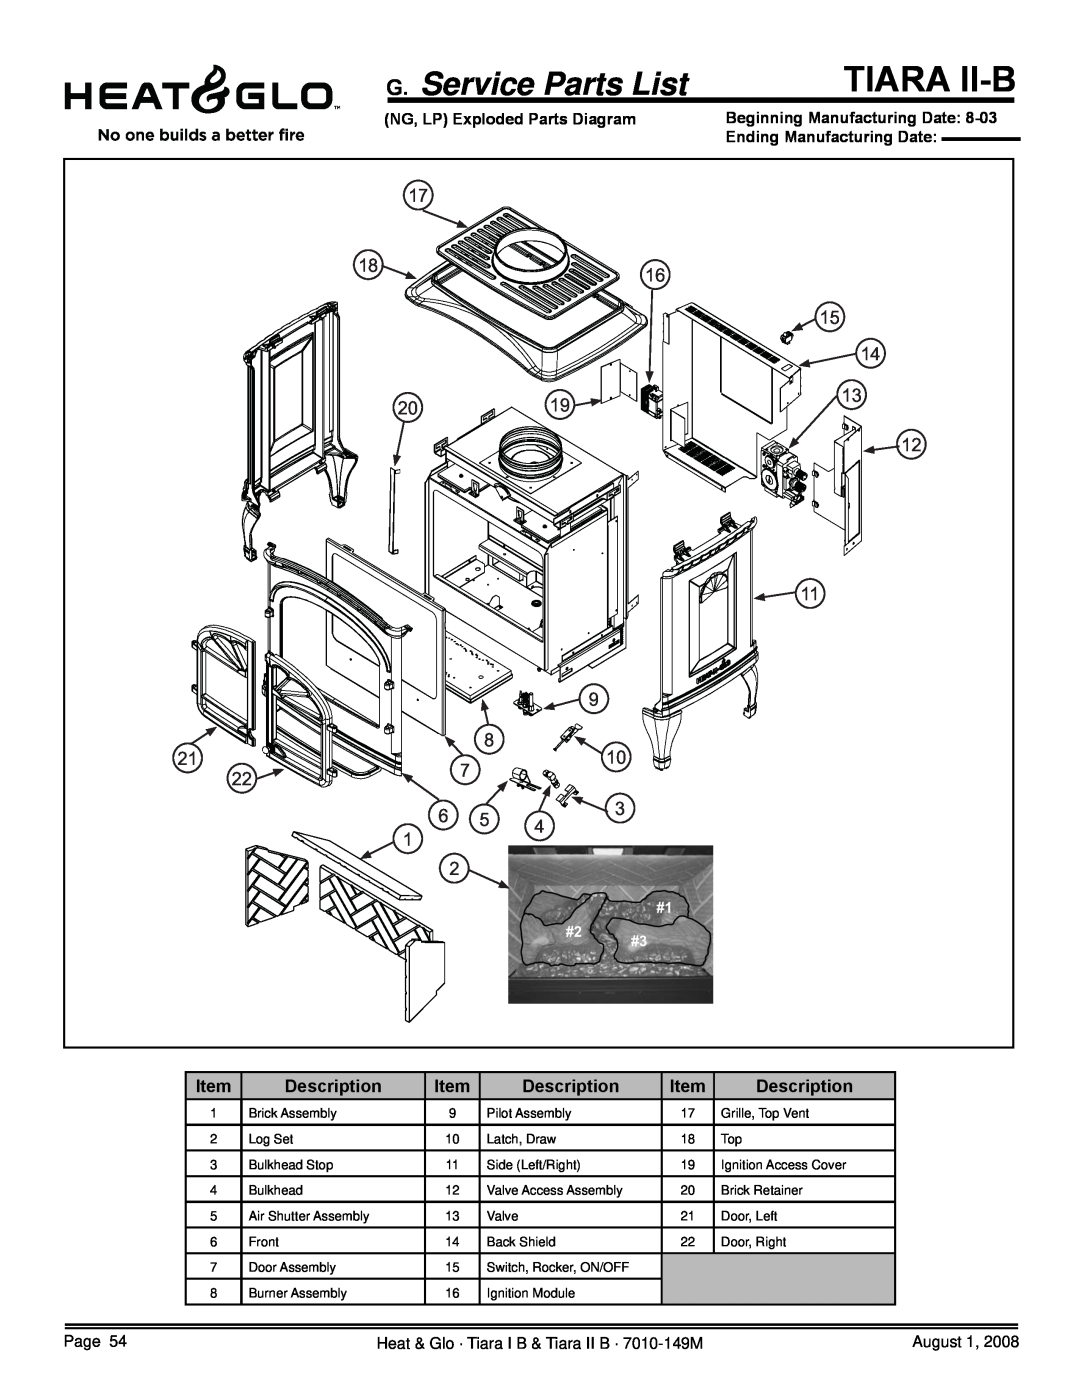 Hearth and Home Technologies TIARAI-CES Tiara Ii-B, G. Service Parts List, Description, NG, LP Exploded Parts Diagram 